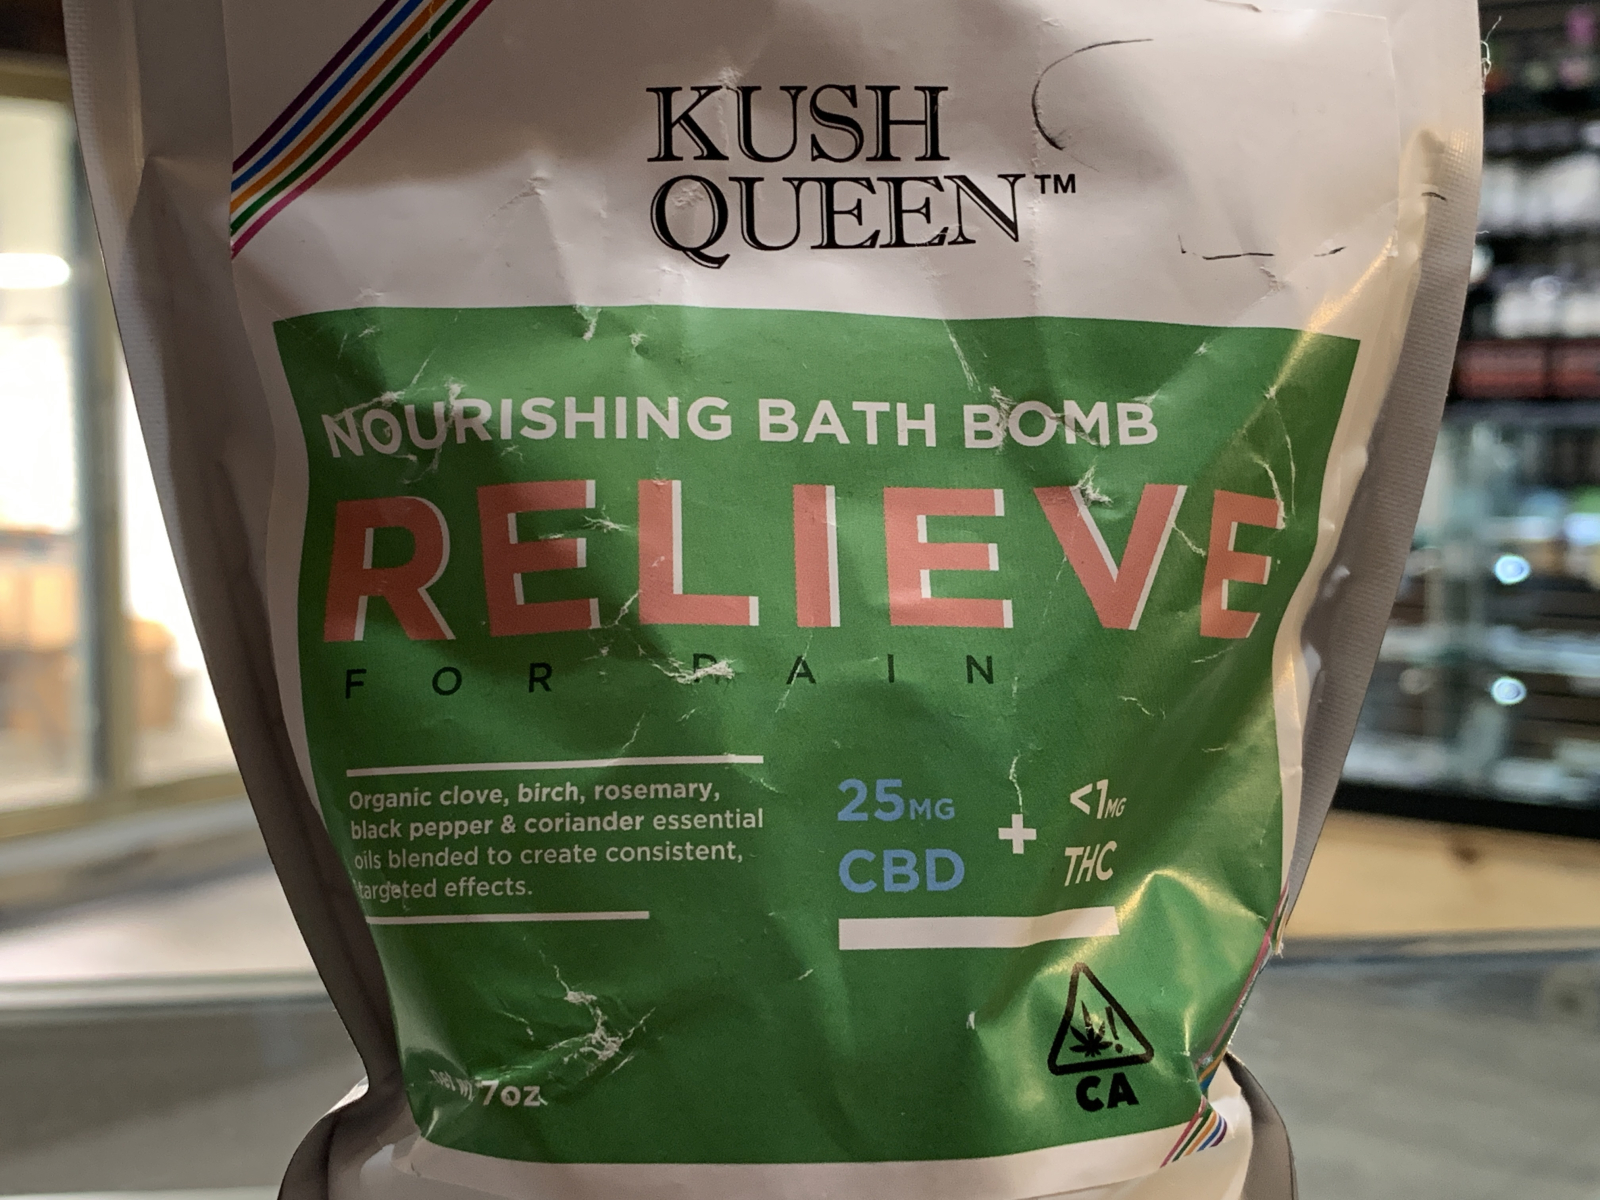 Kush Queen Relieve cbd bath bomb